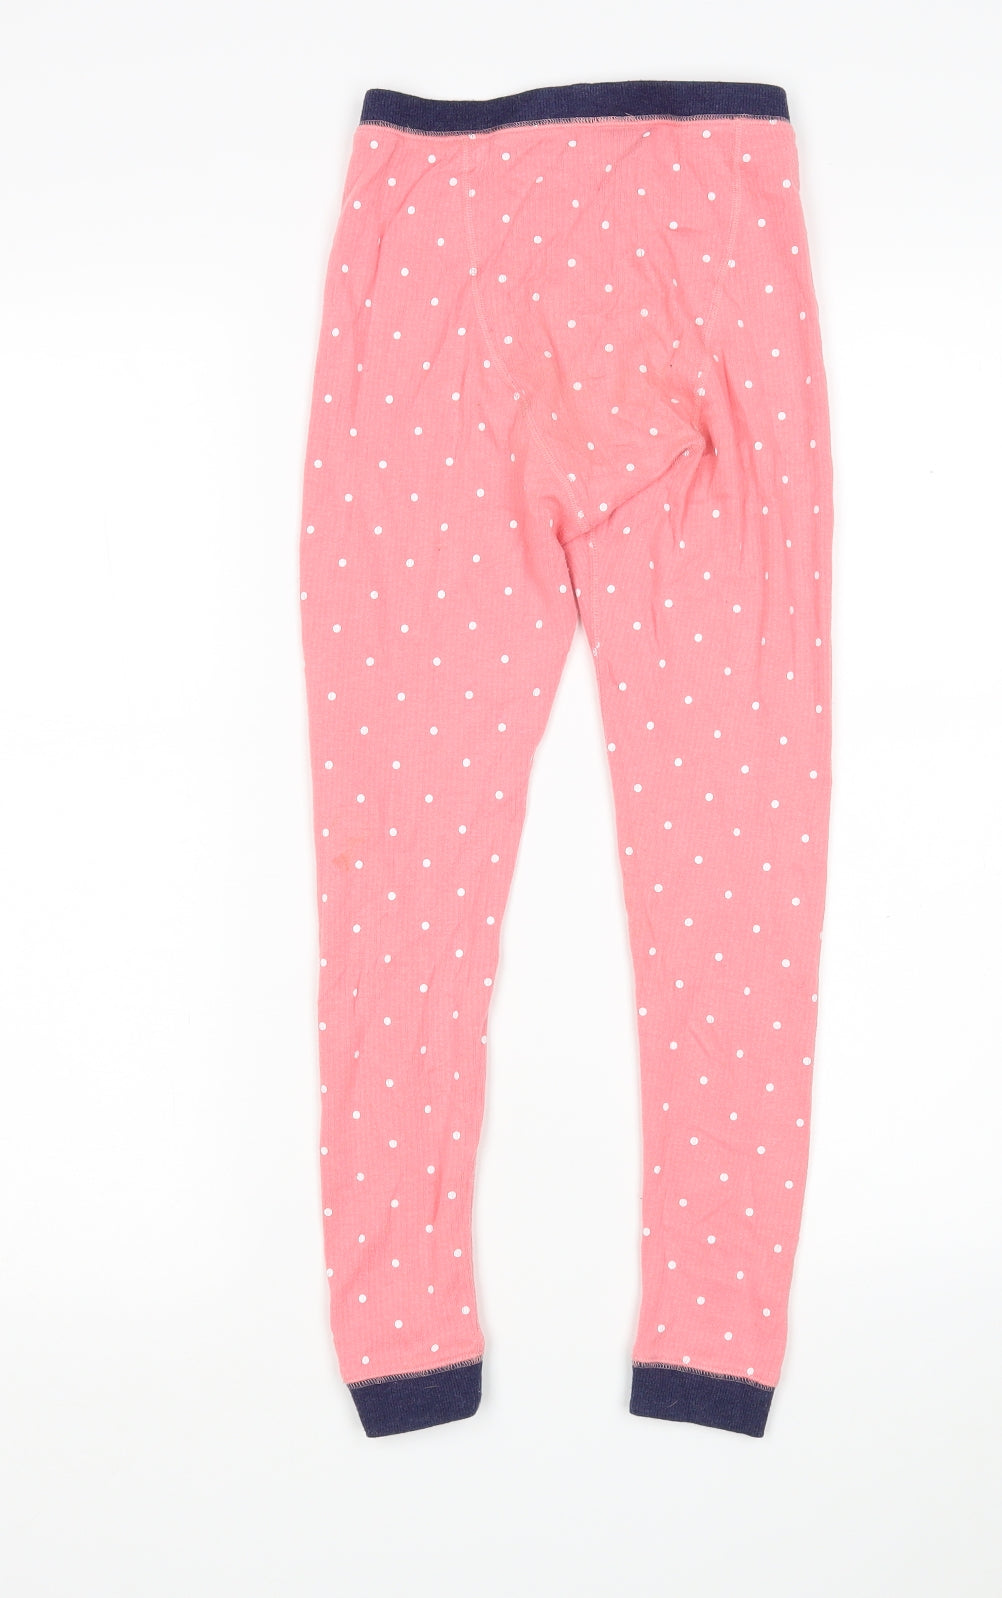 M&S Girls Pink Polka Dot Cotton  Pyjama Pants Size 9-10 Years